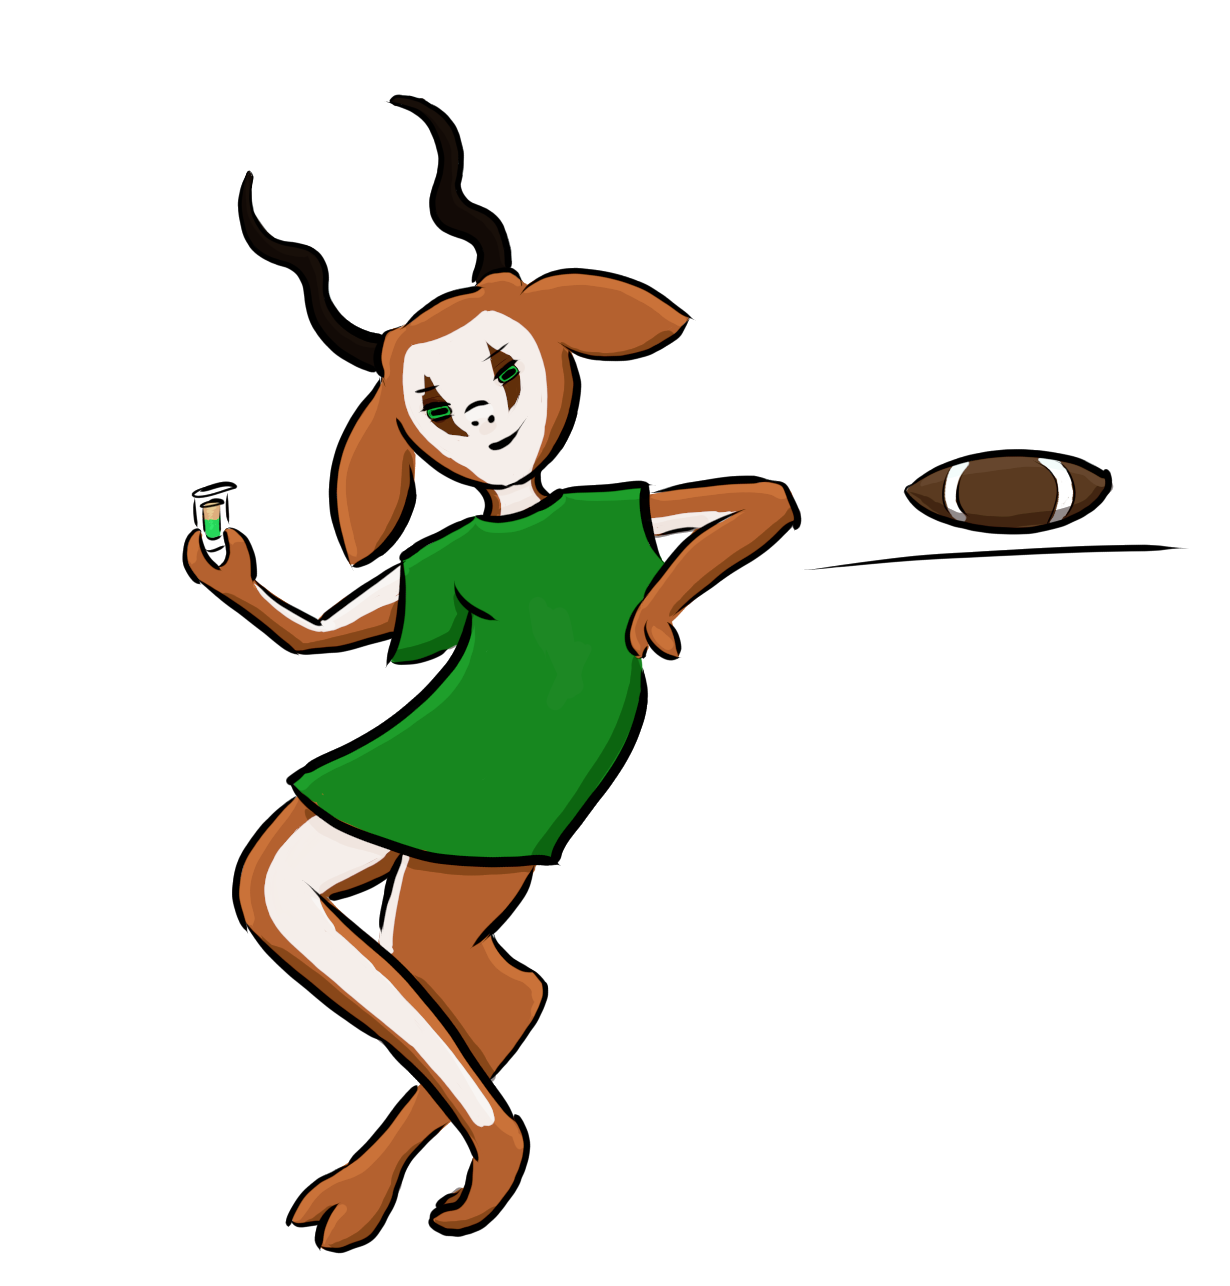 bmj-springbok-mascot-cropped-01.png